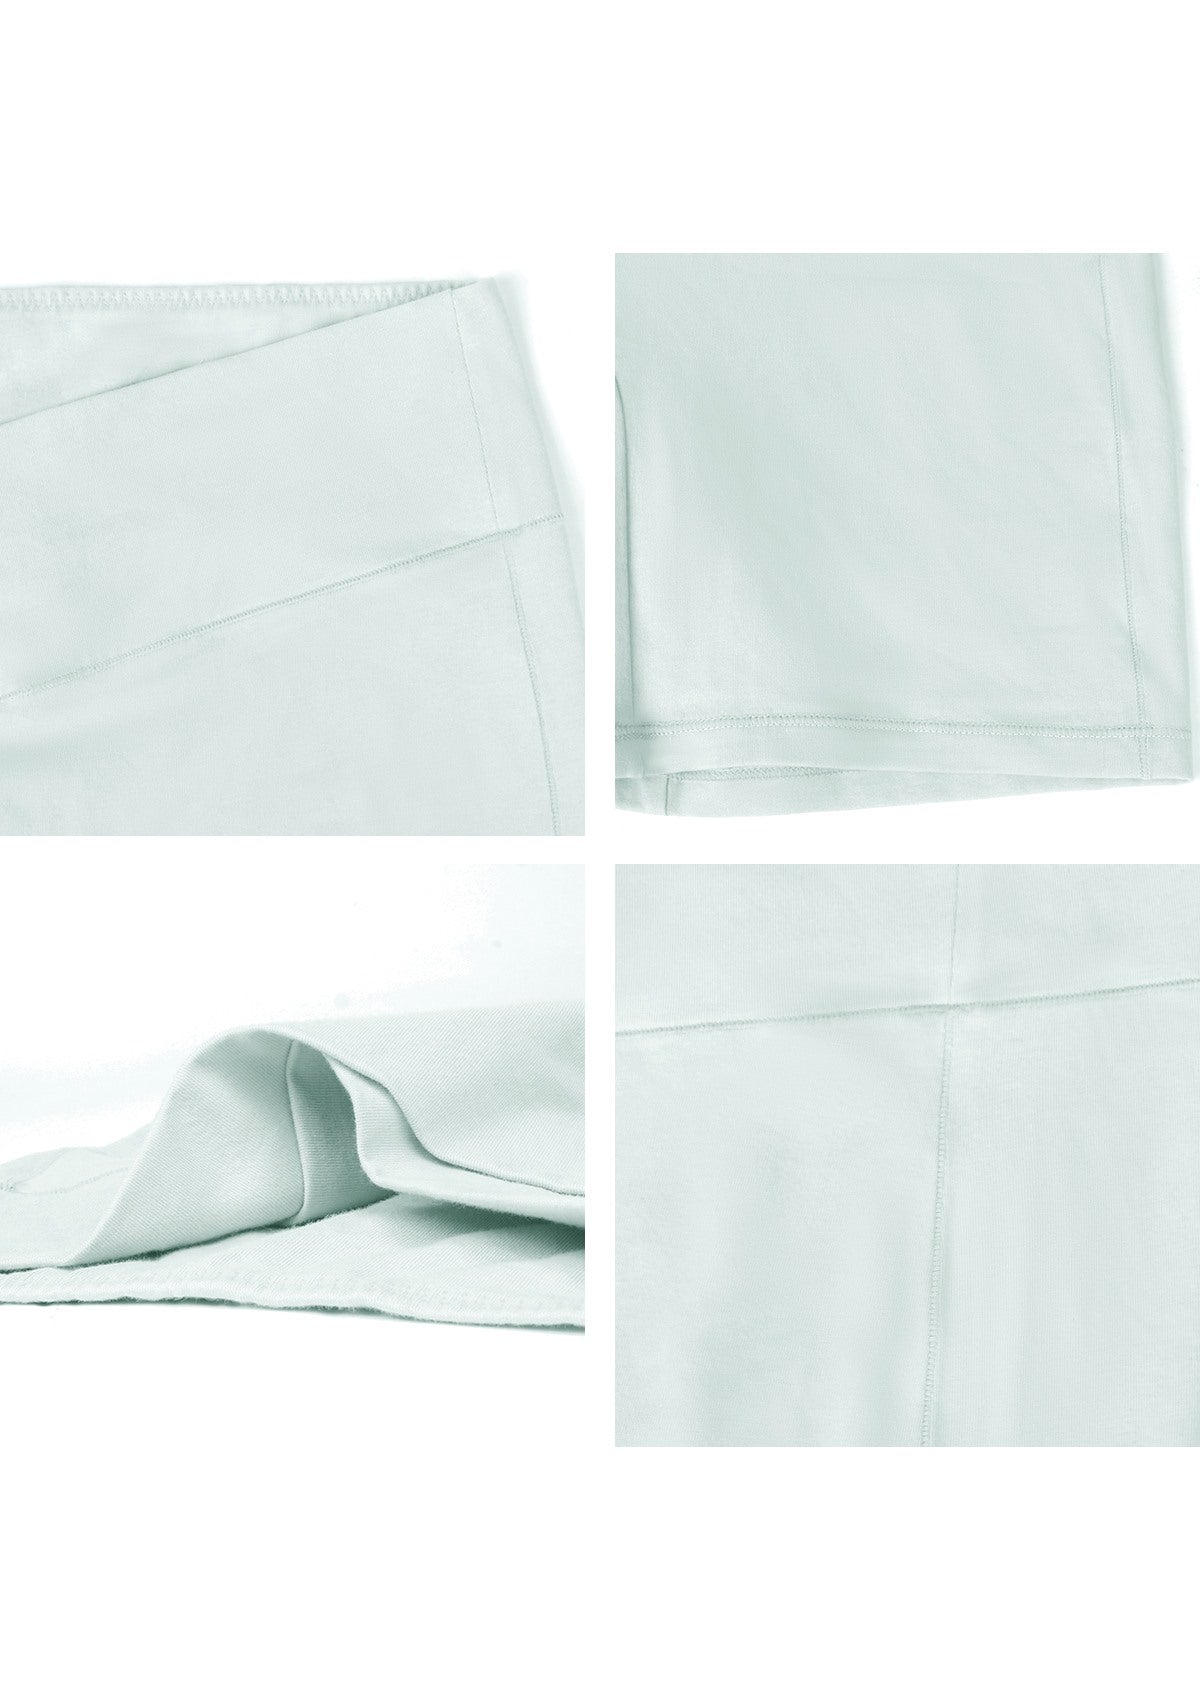 All-Day Comfort High-Rise Cotton Boyshorts Underwear 3 Pack - L / Black+Beige+Green